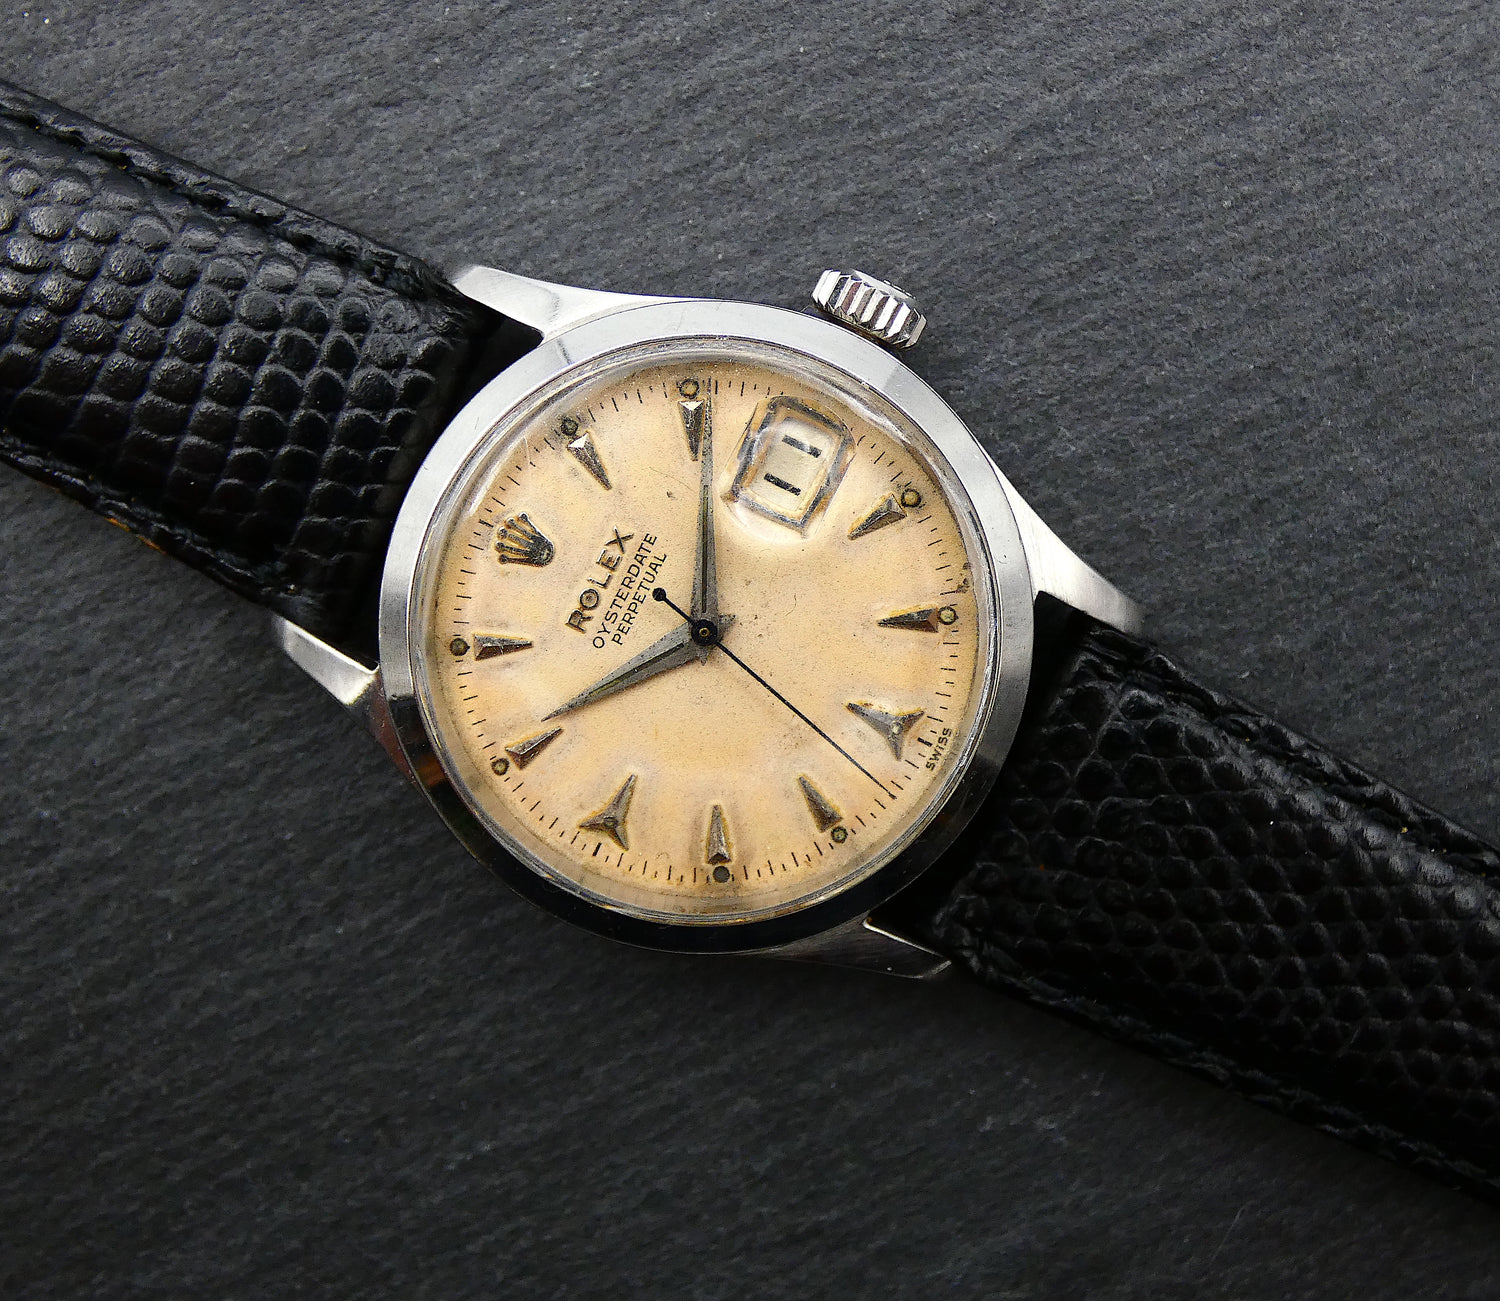 Rolex Oyster Perpetual Date 1954 / creme dial / all original